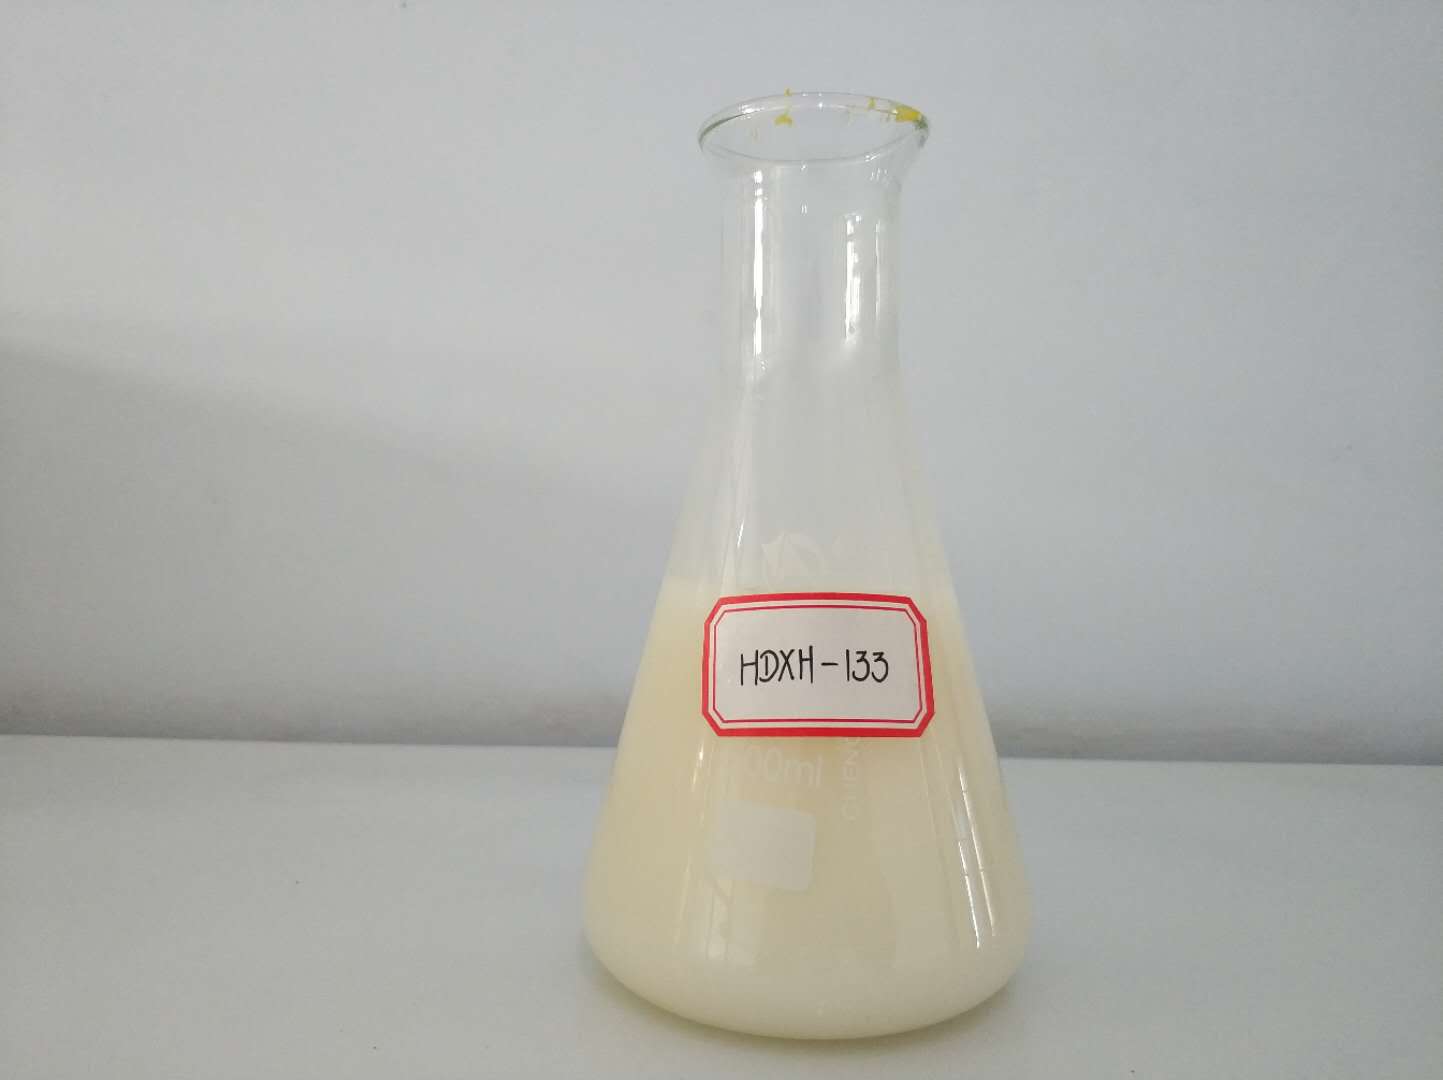 HDL-133用于石油壓裂的非抗鹽絮凝劑